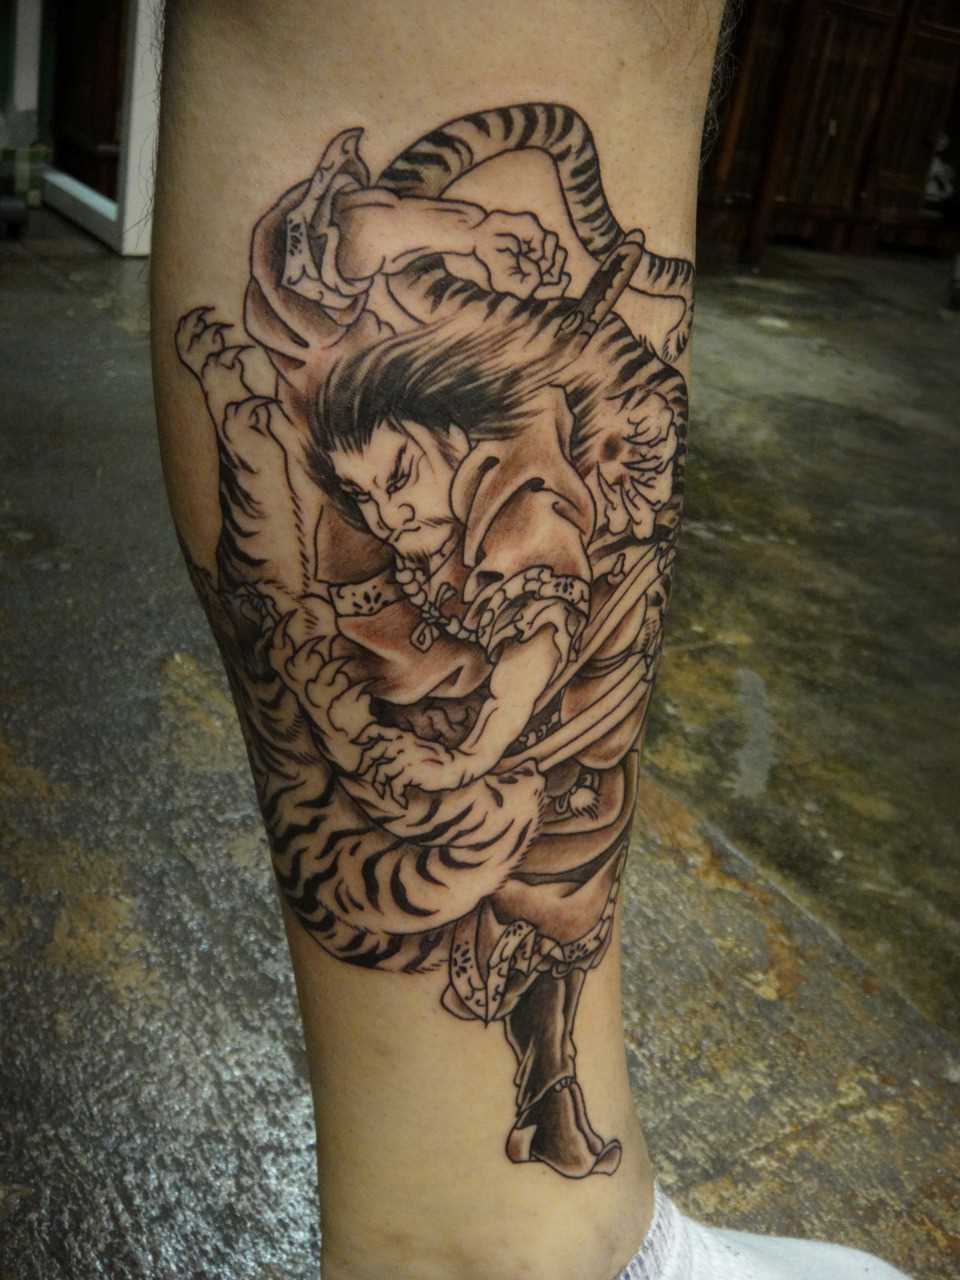 Tatuagem na perna do cara - samurai